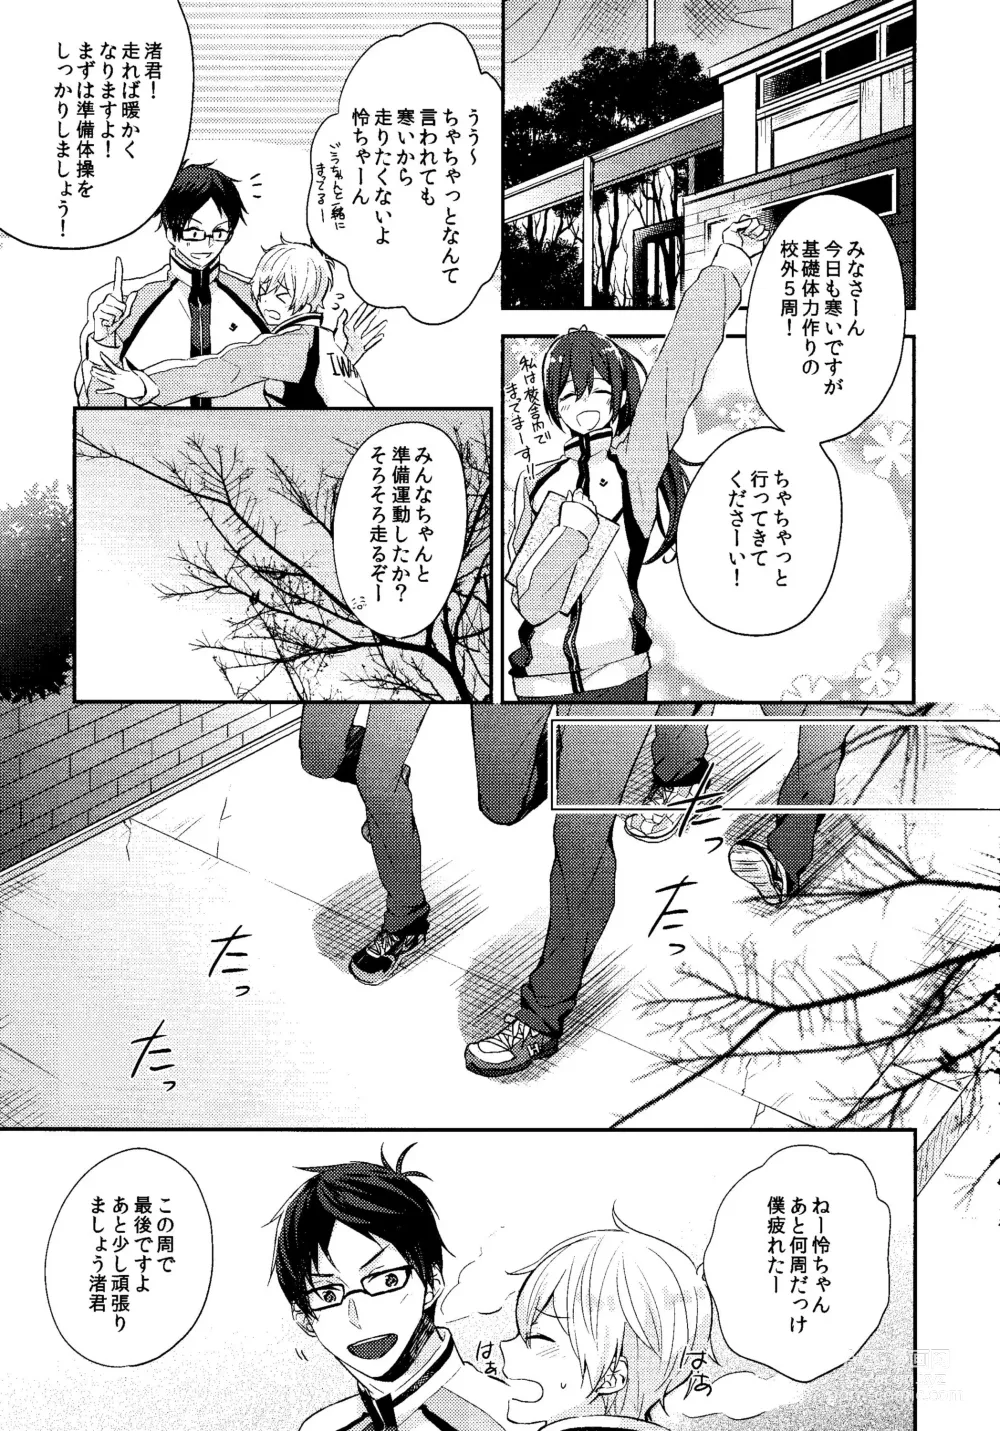 Page 4 of doujinshi Gaman Kurabe